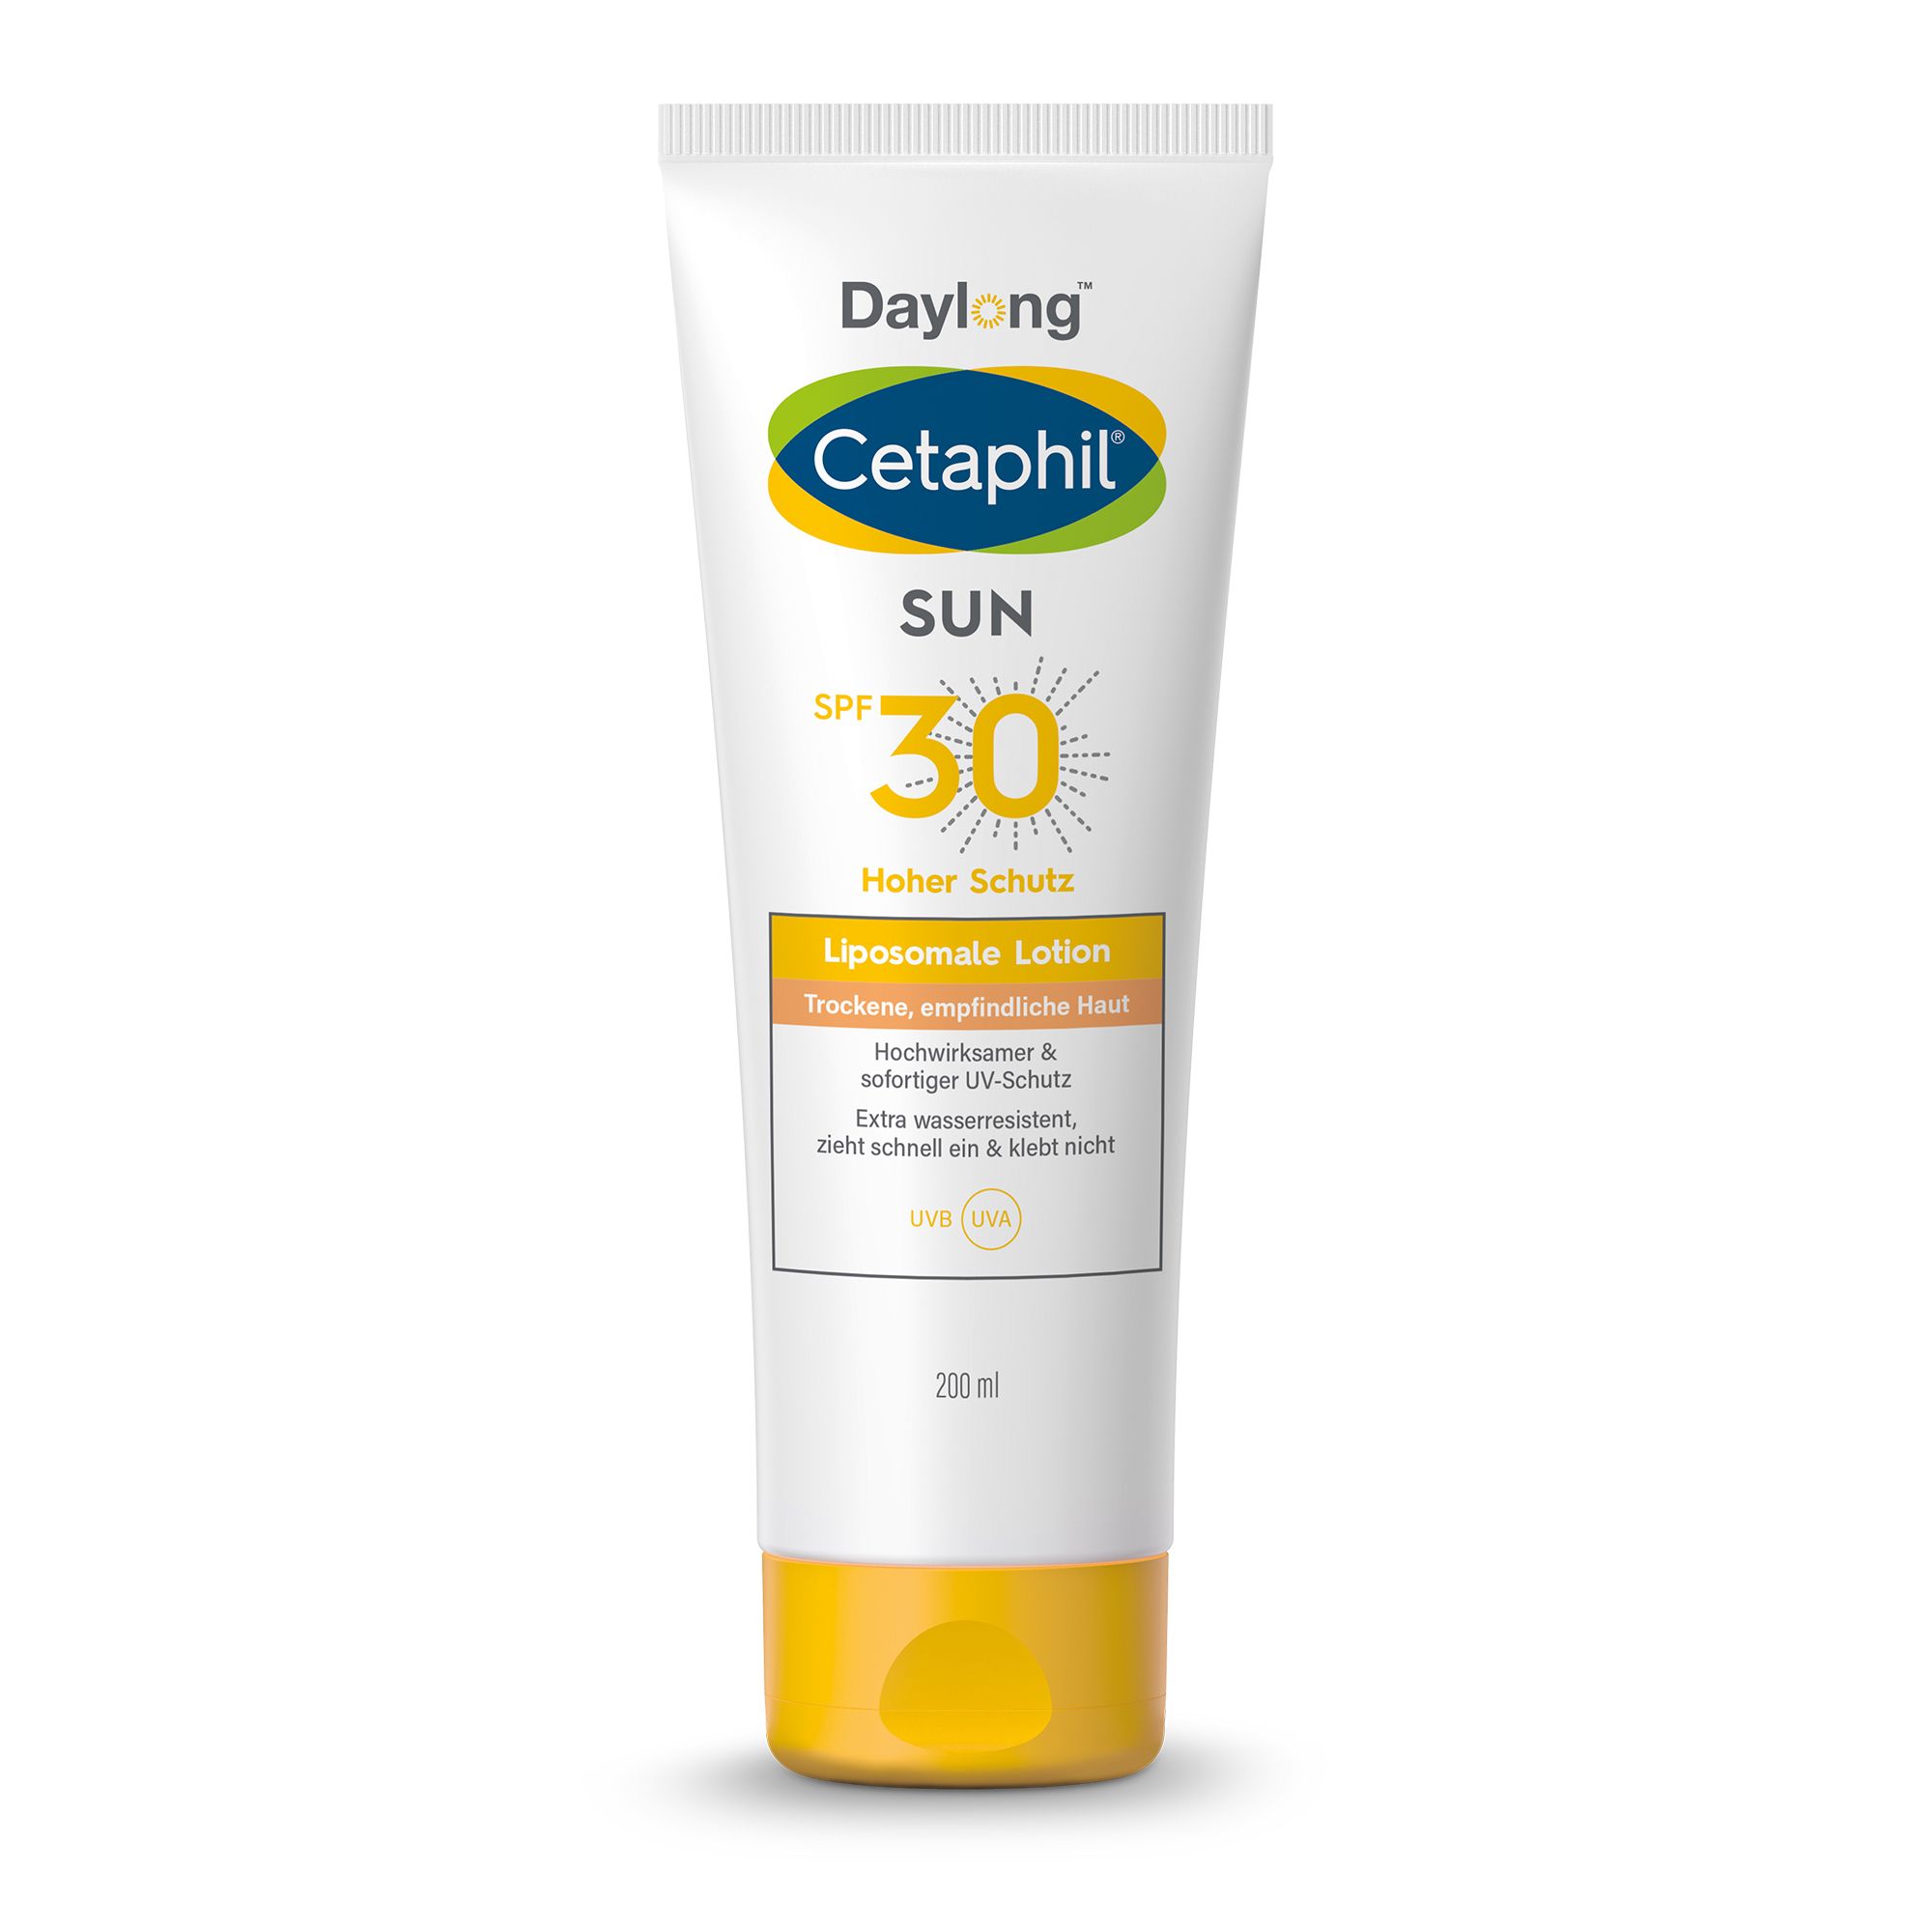 Cetaphil® SUN Liposomale Lotion SPF 30 Feuchtigkeitsspendende Sonnenschutzlotion